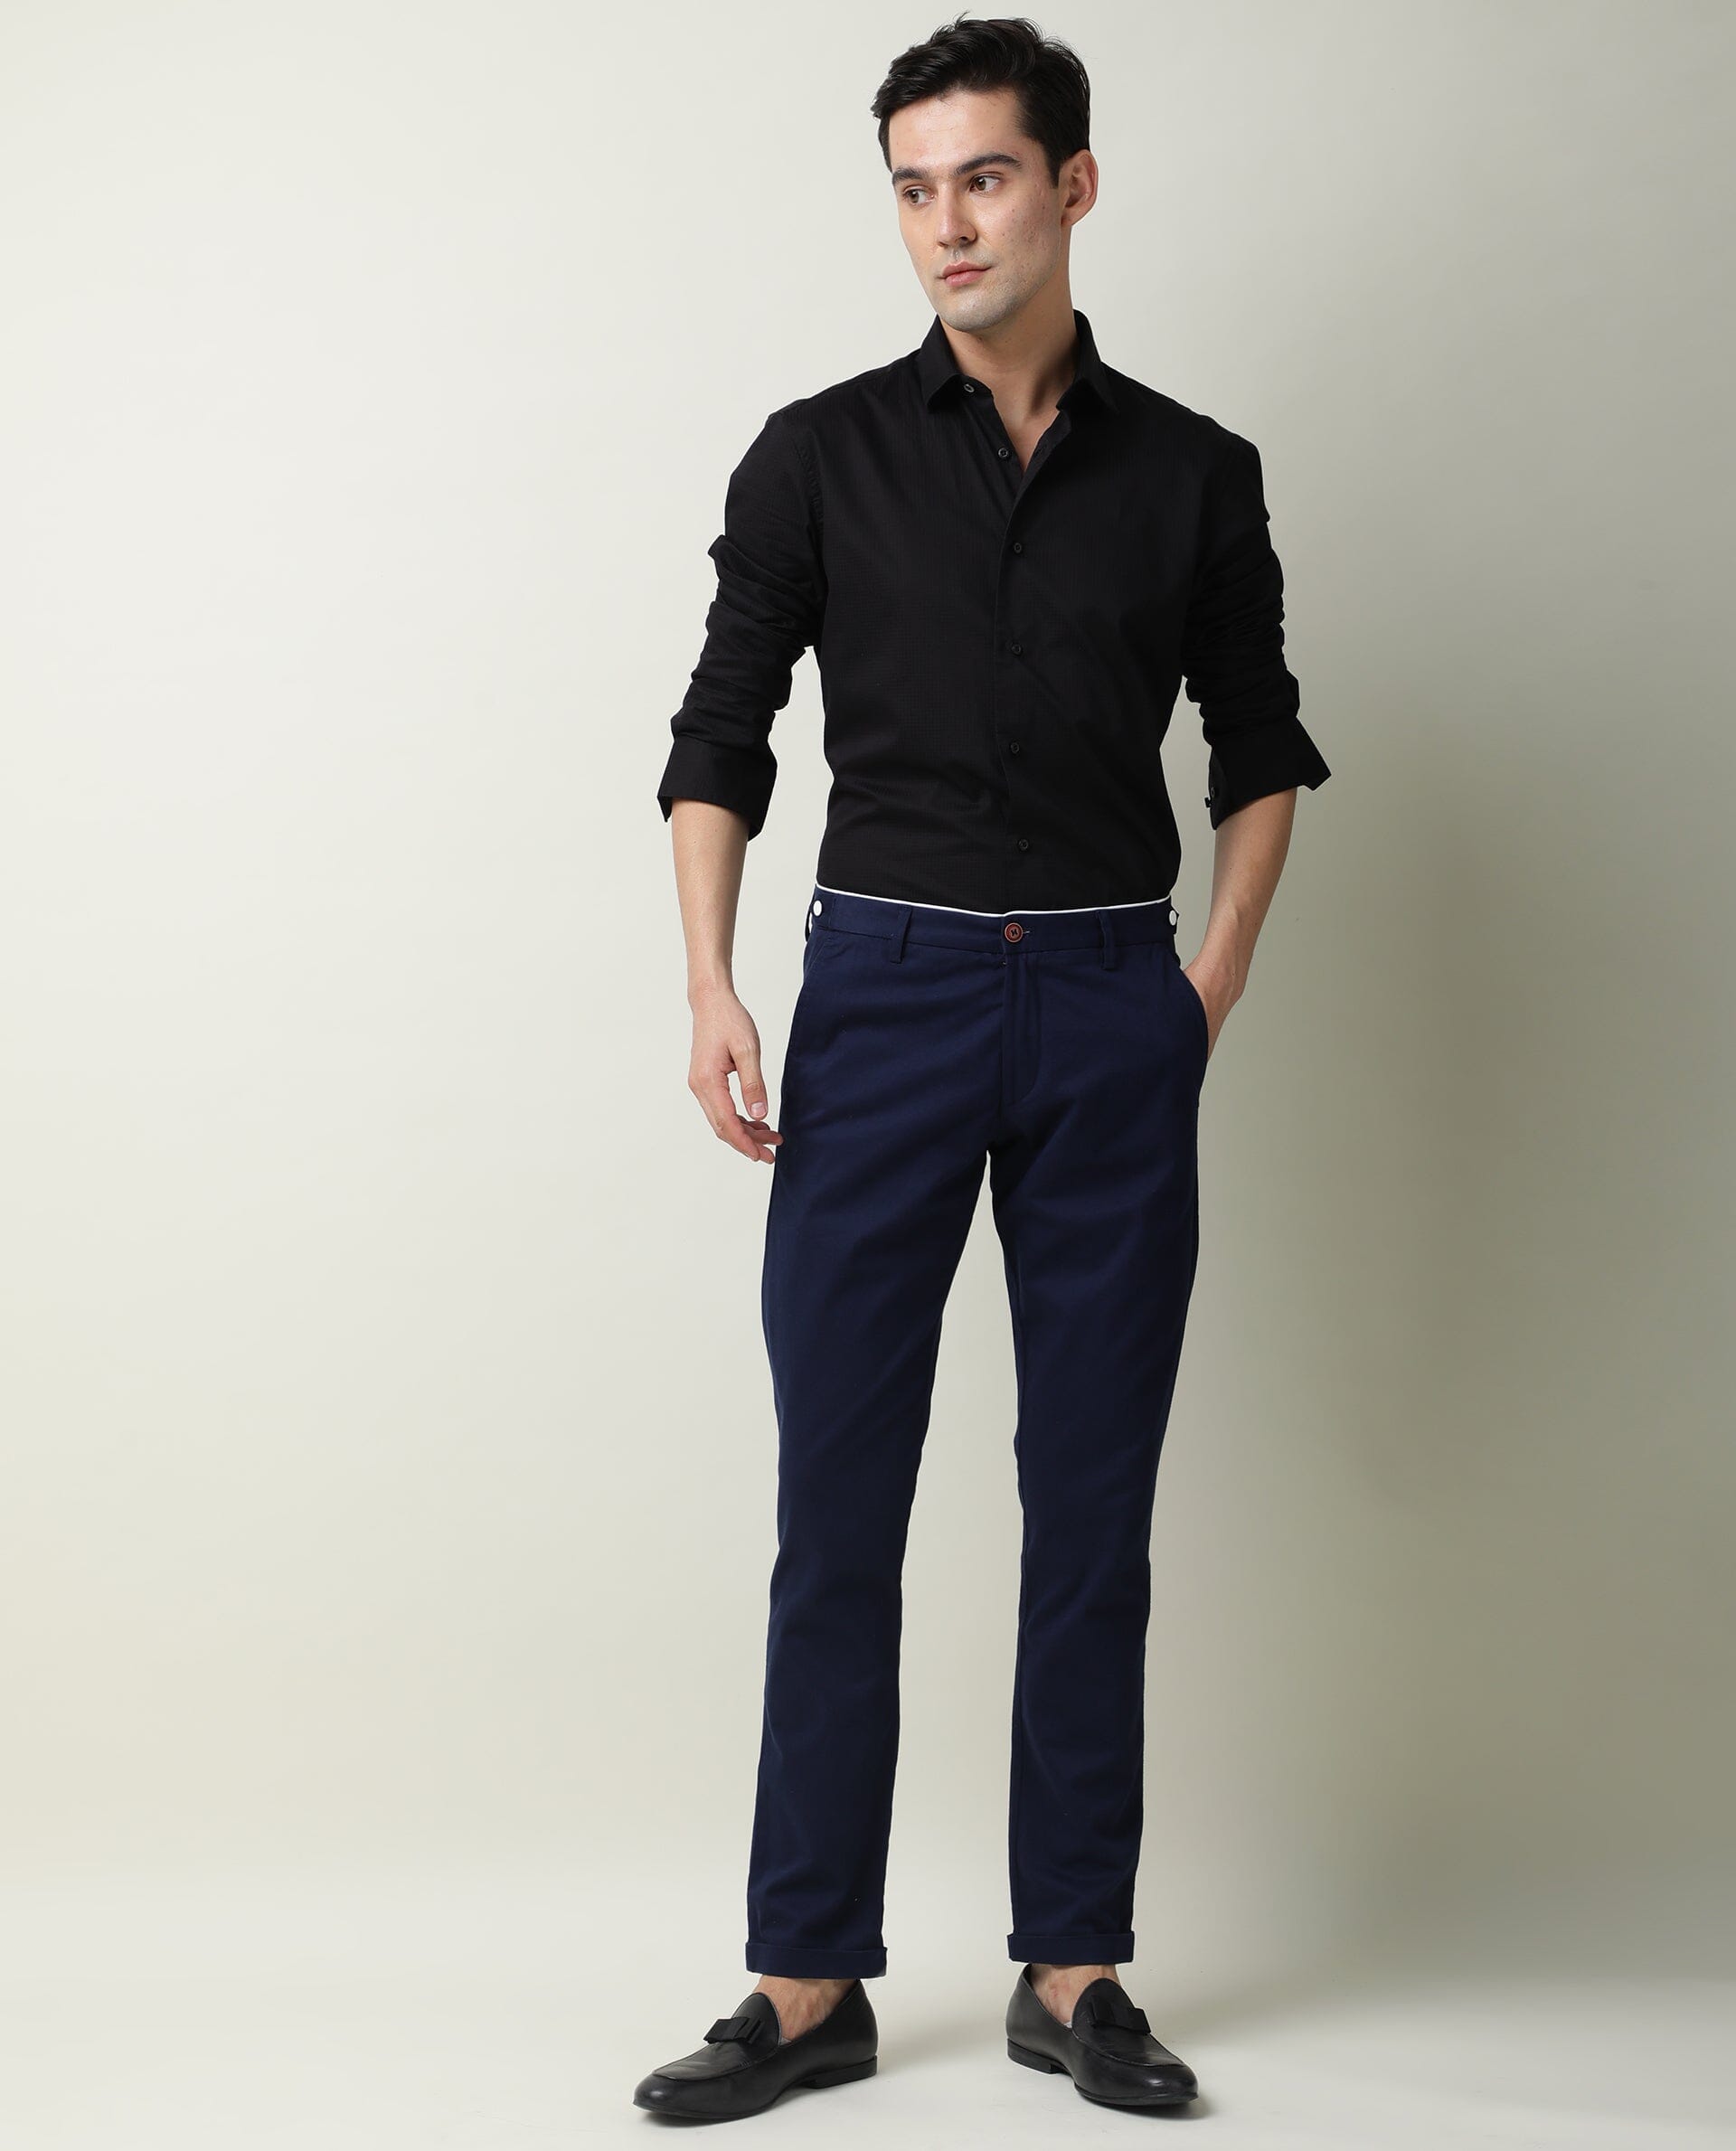 Royal Navy and Black Slim Fit Tuxedo Pants for Women – LITTLE BLACK TUX